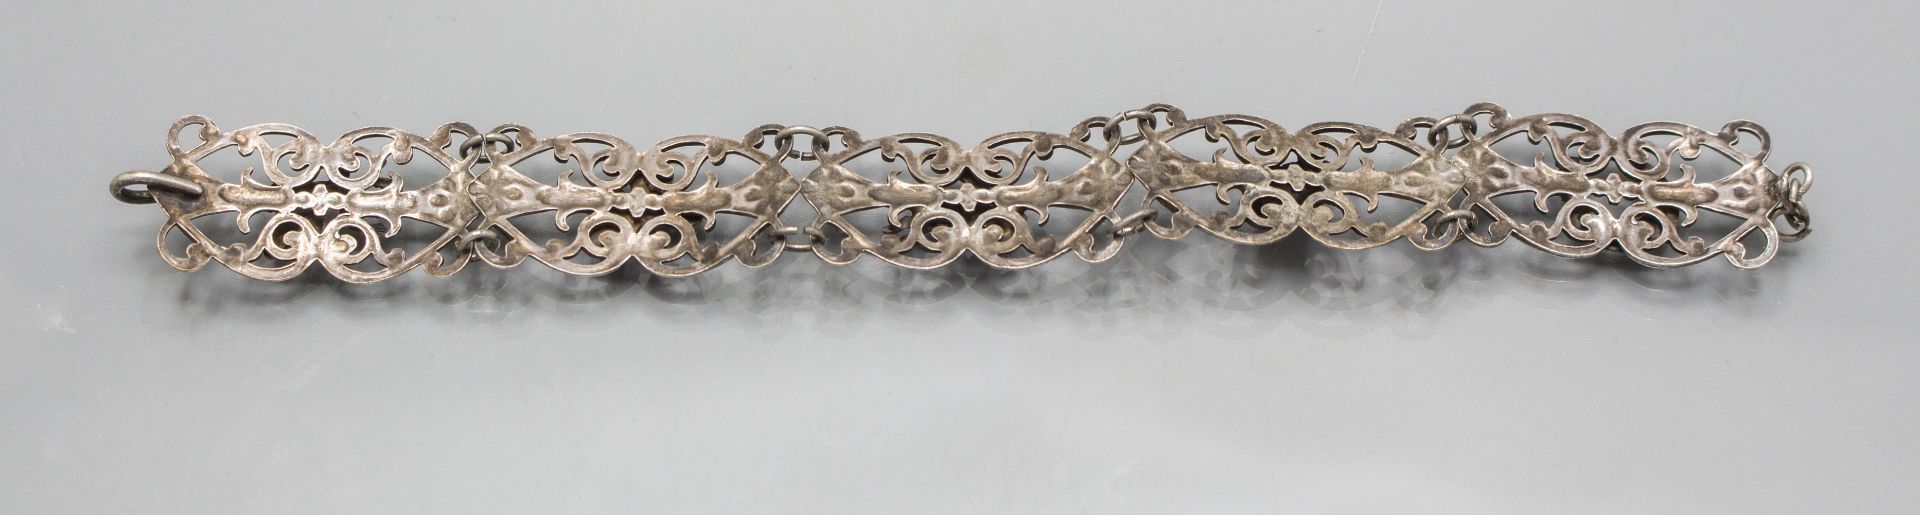 Armband mit Glücksbringern / A bracelet with lucky charms, Anfang 20. Jh. - Image 2 of 2